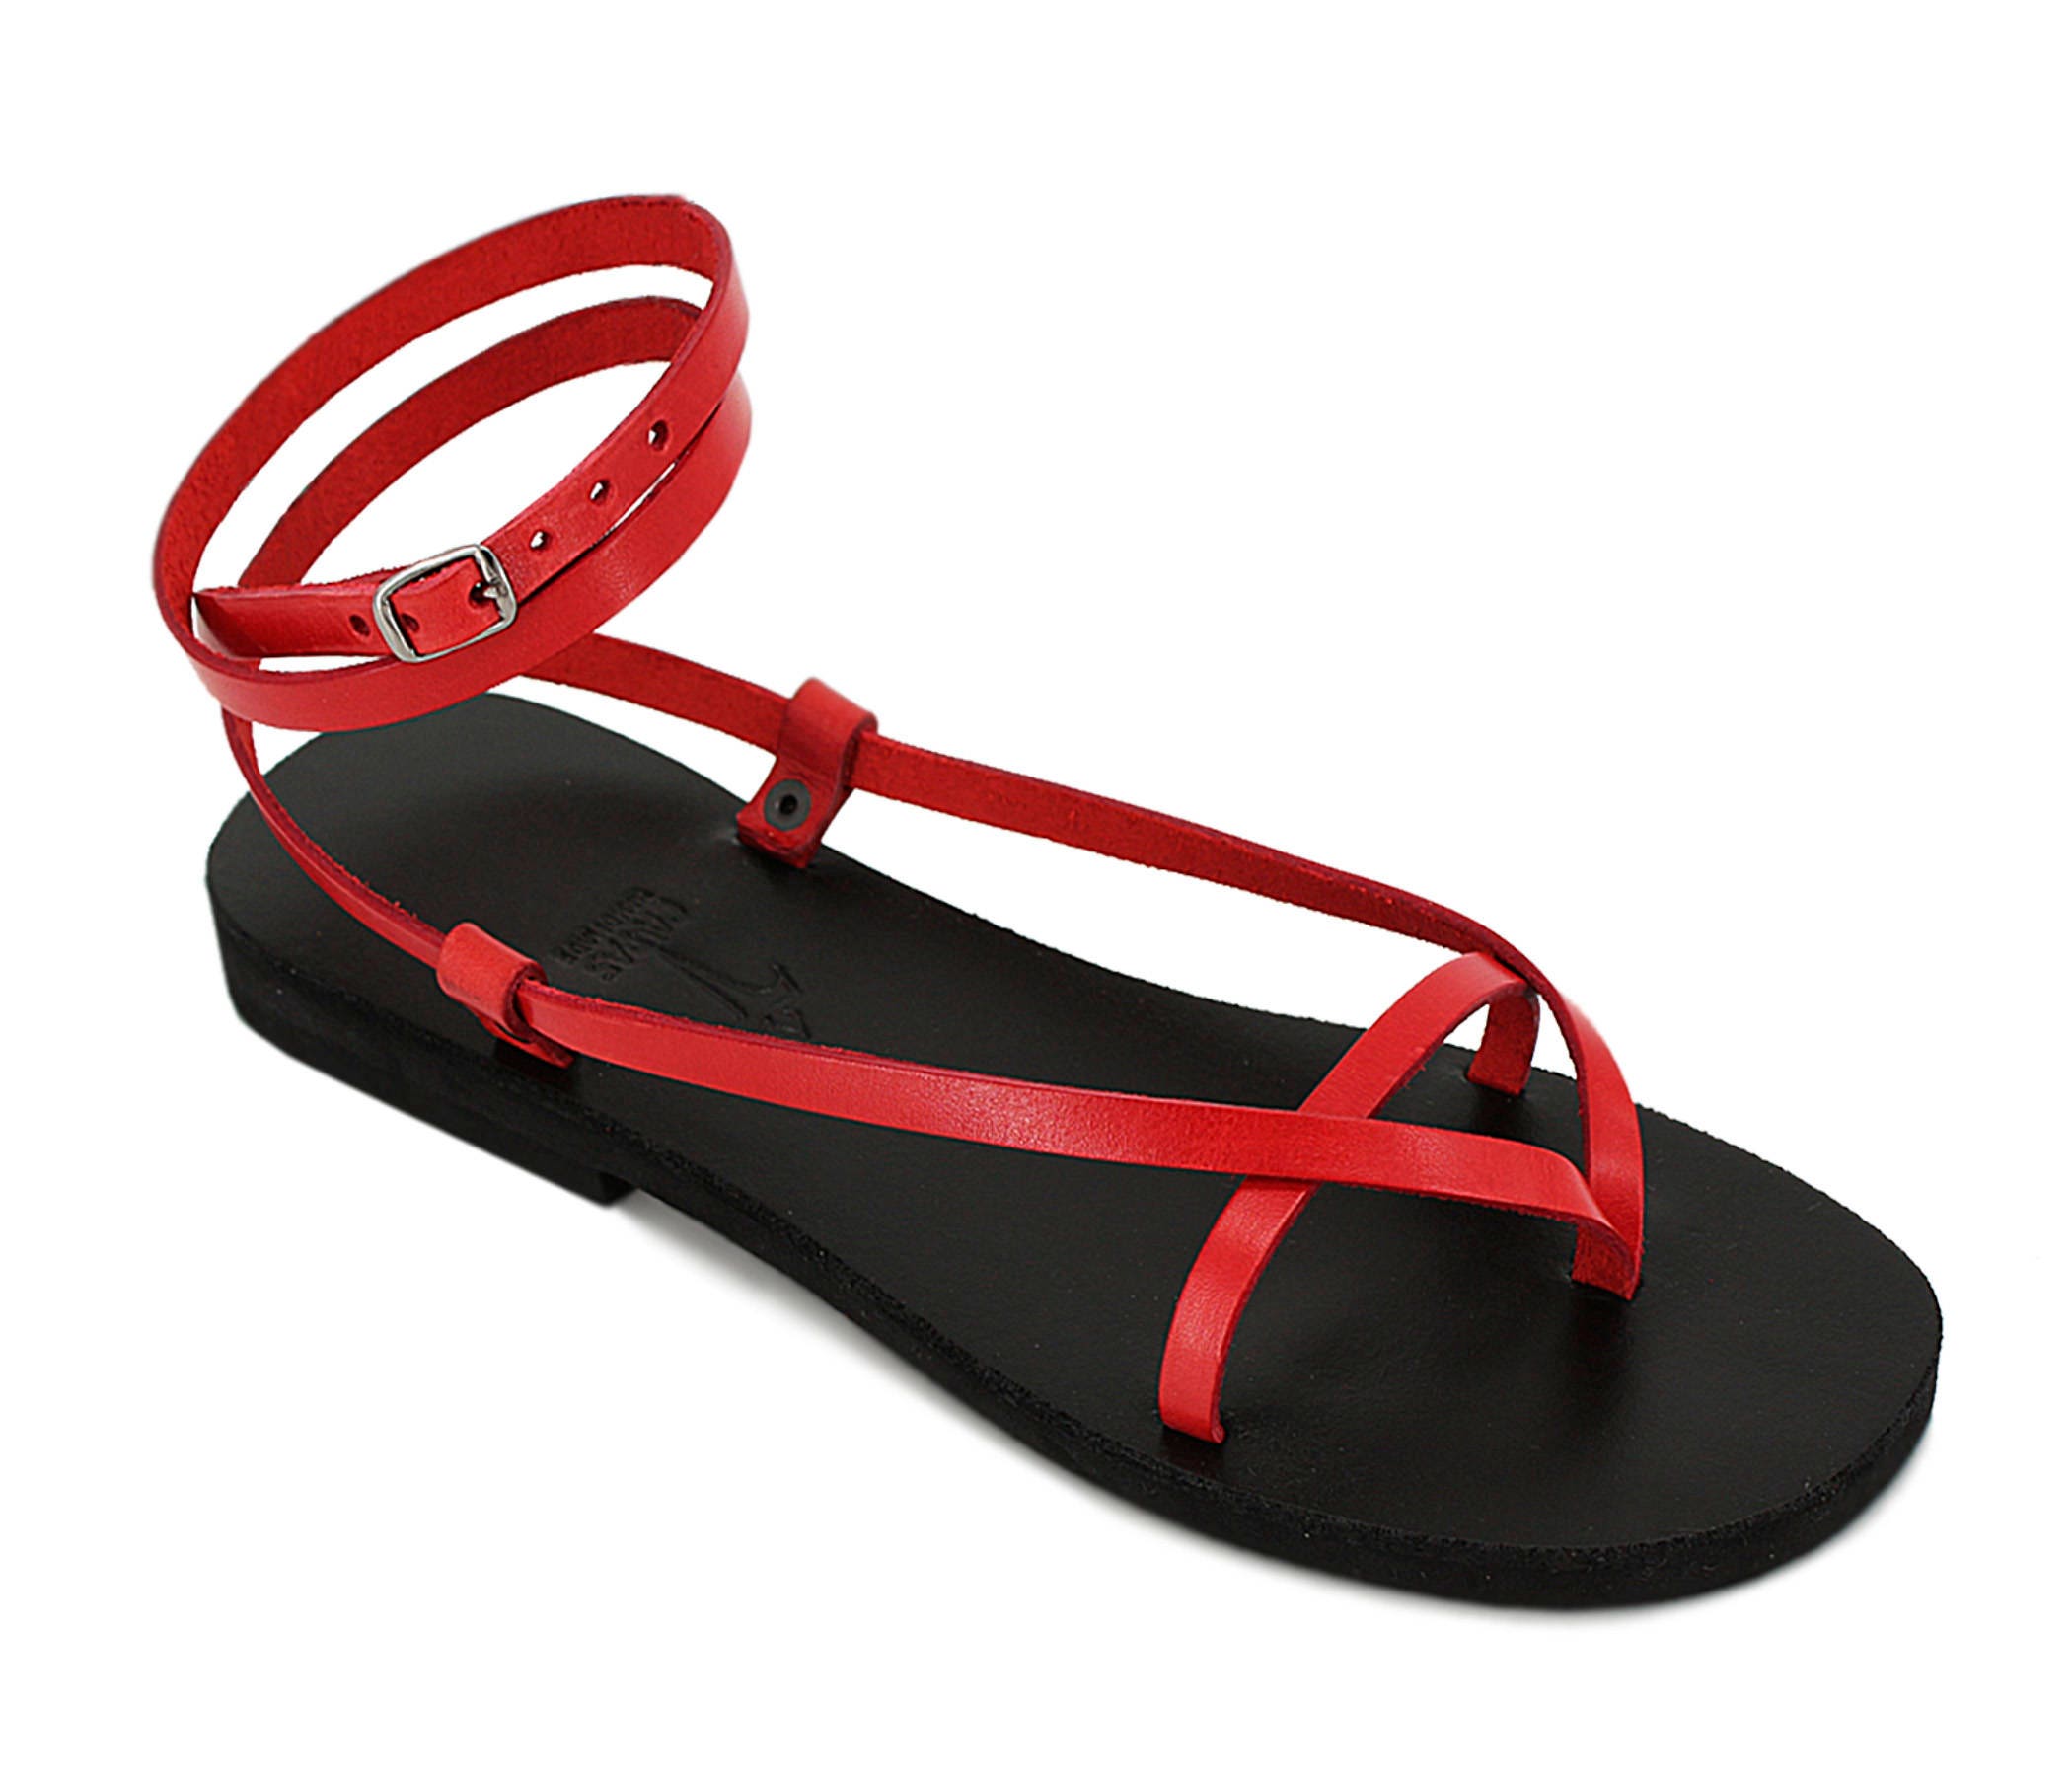 SUNSHINE Leather sandals/ unisex sandals/ strappy sandals | Etsy